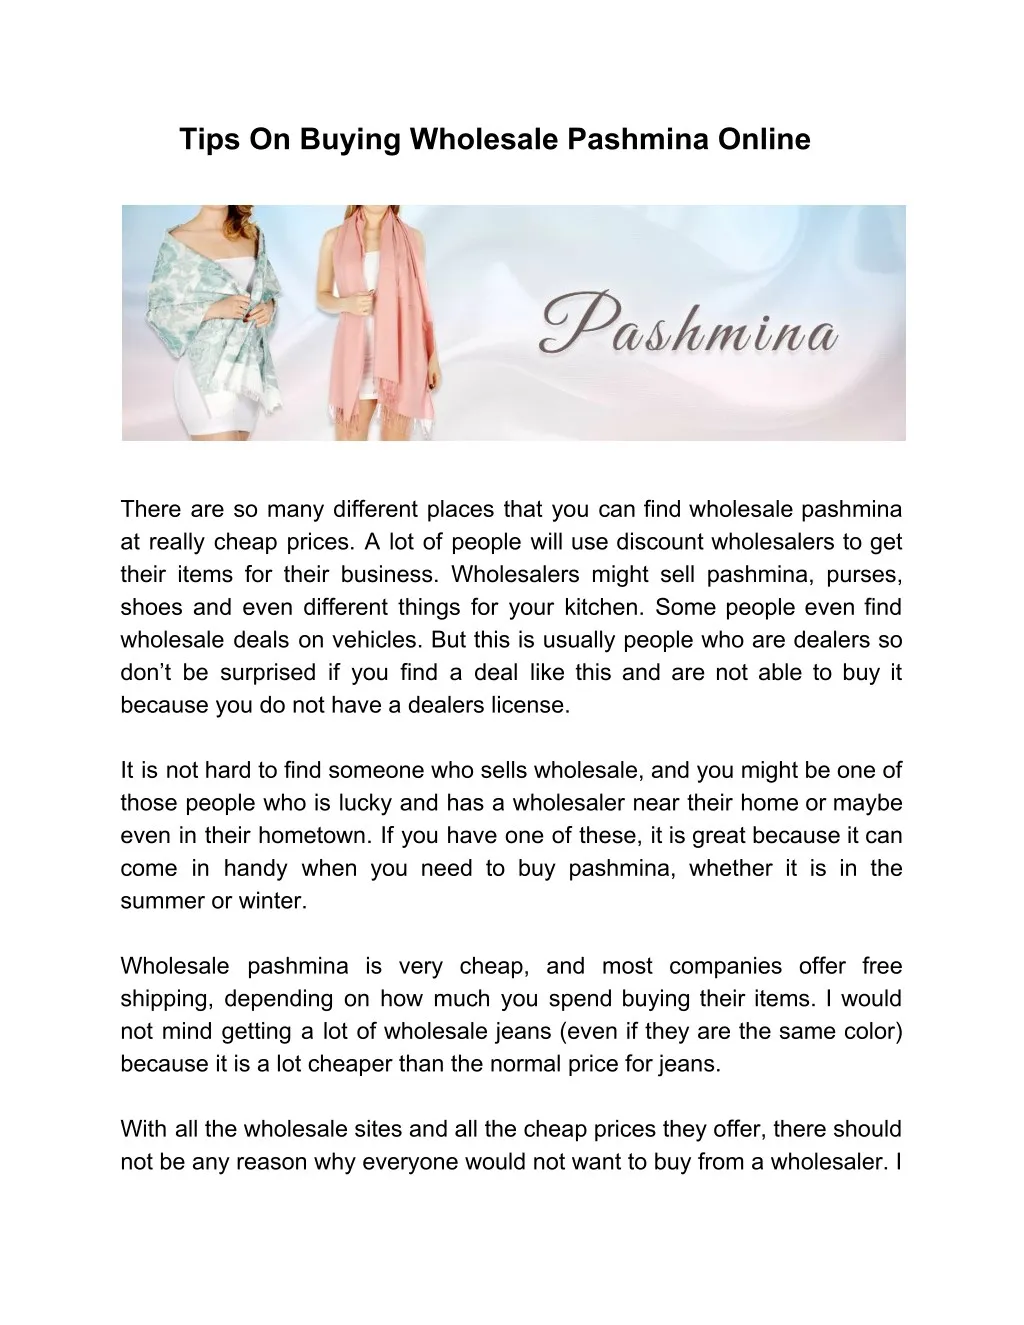 tips on buying wholesale pashmina online